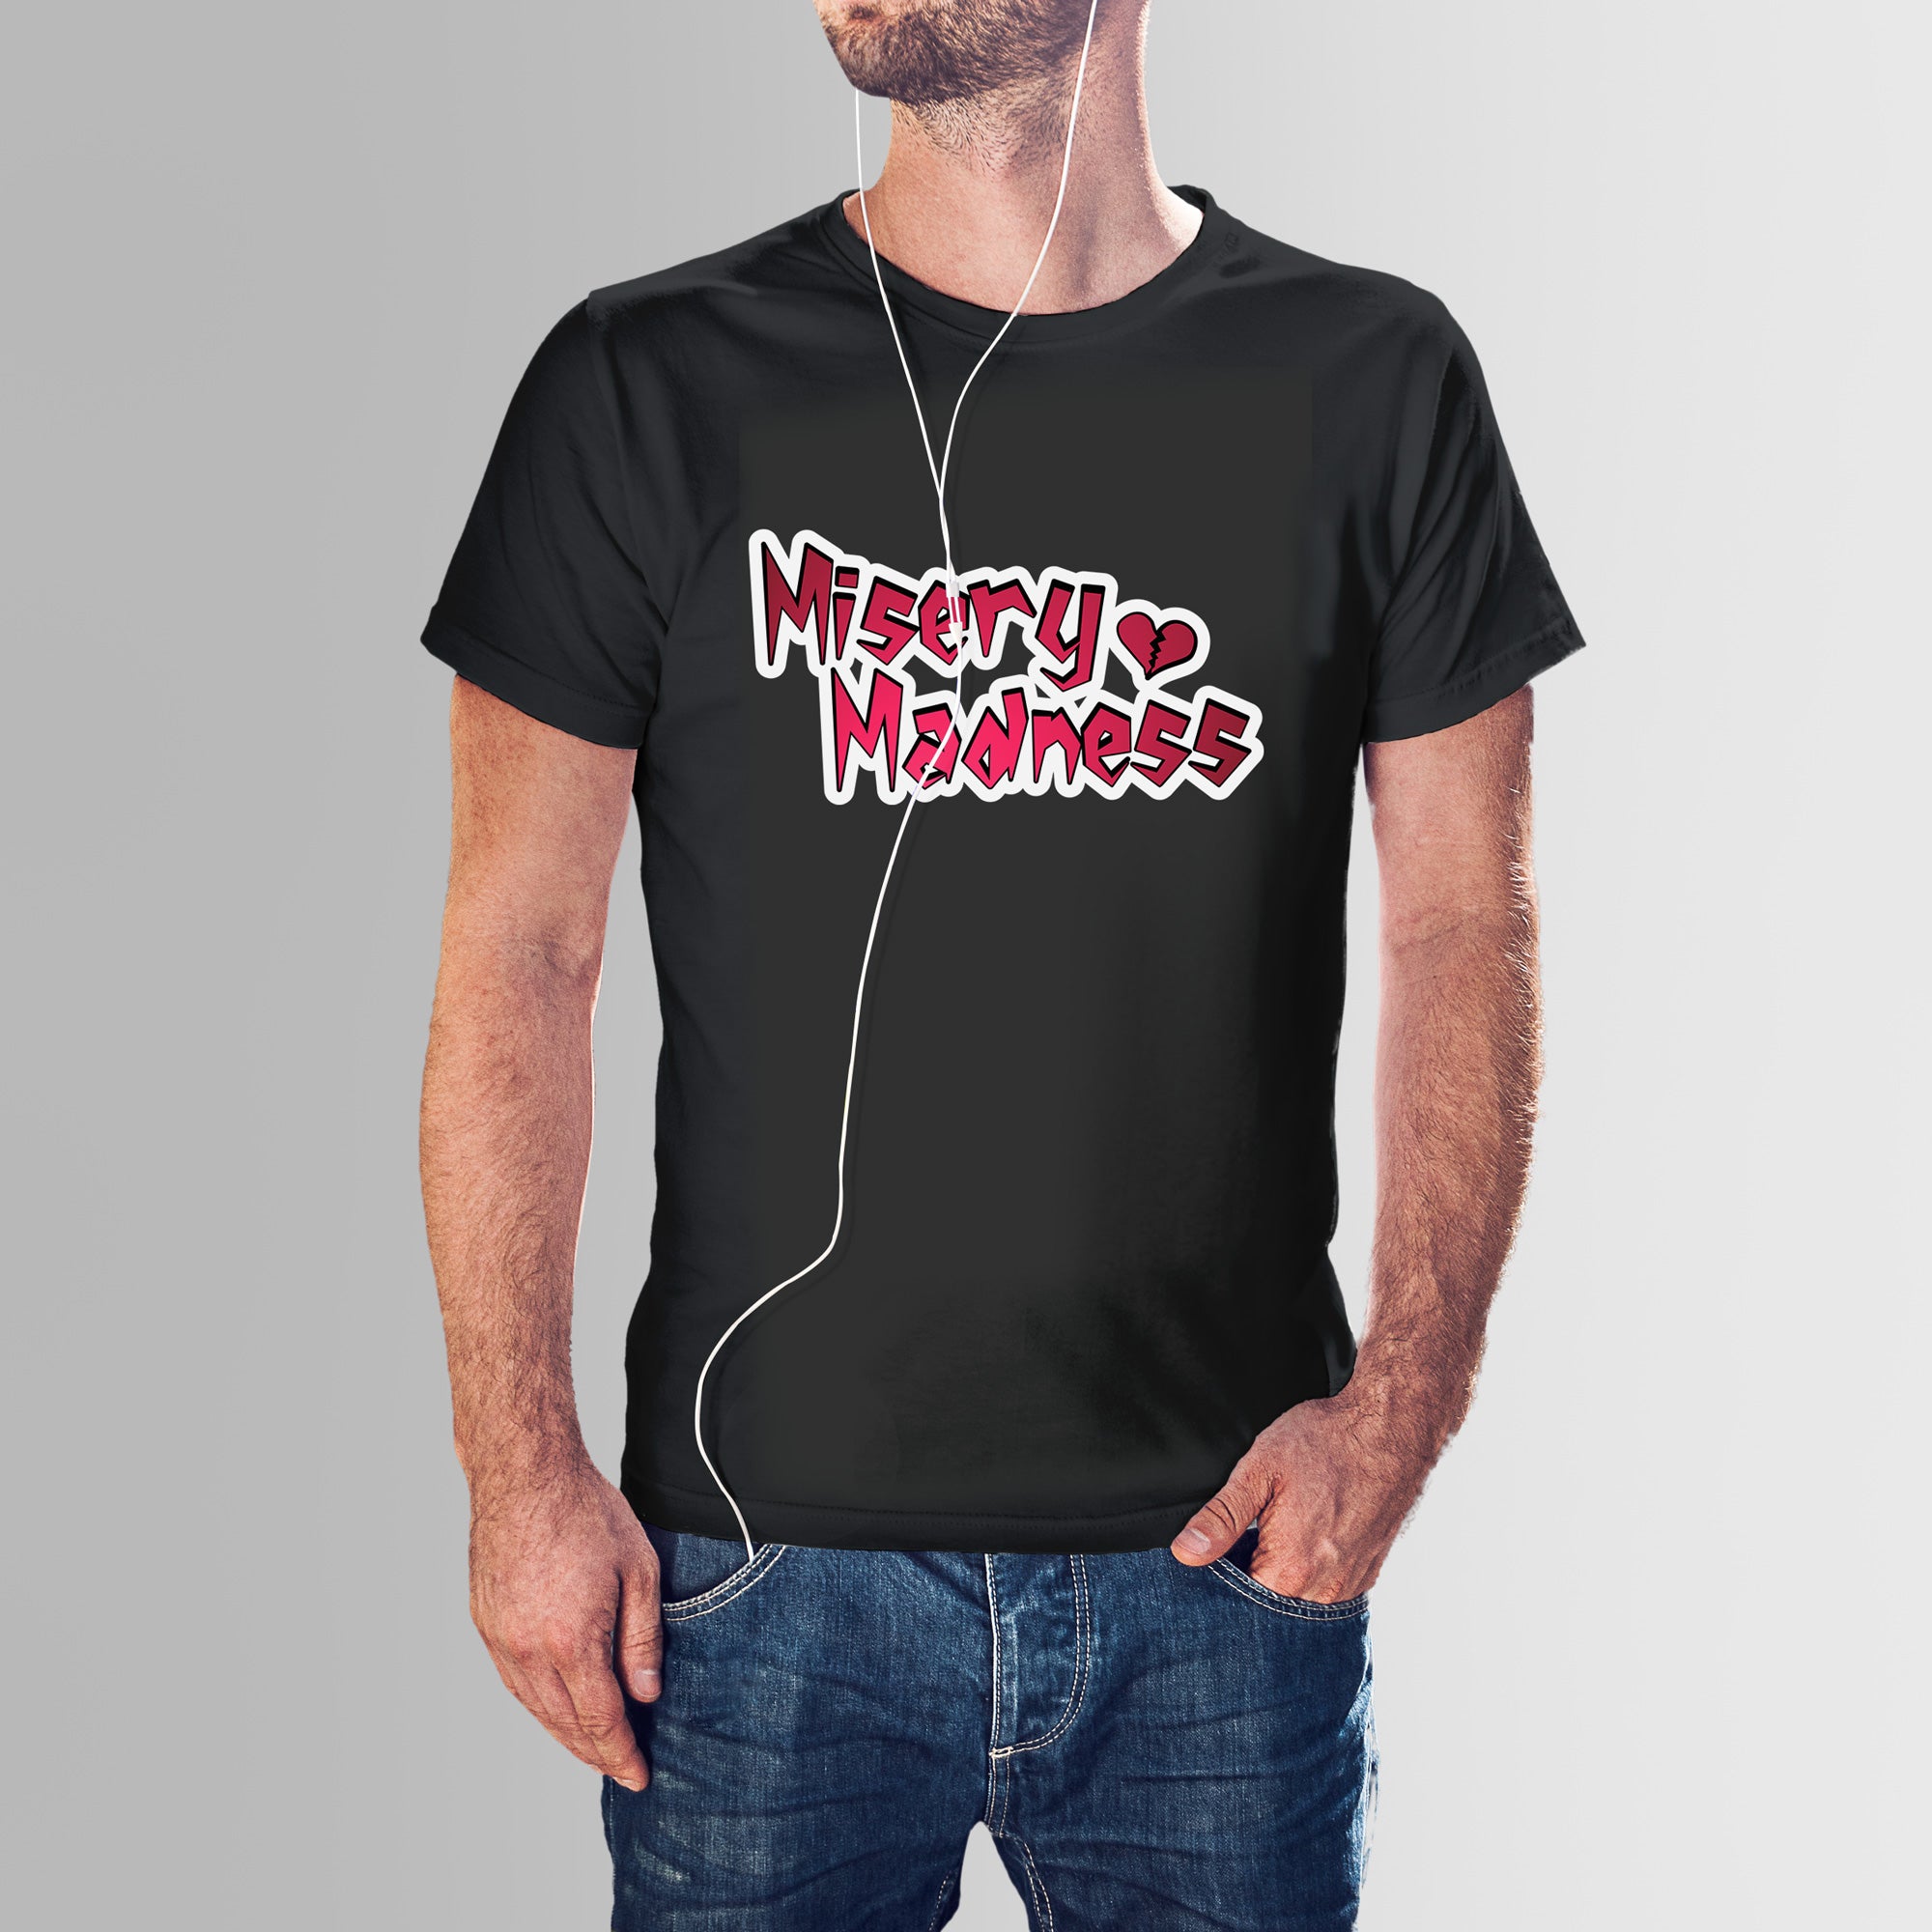 Misery Madness - Logo Shirt